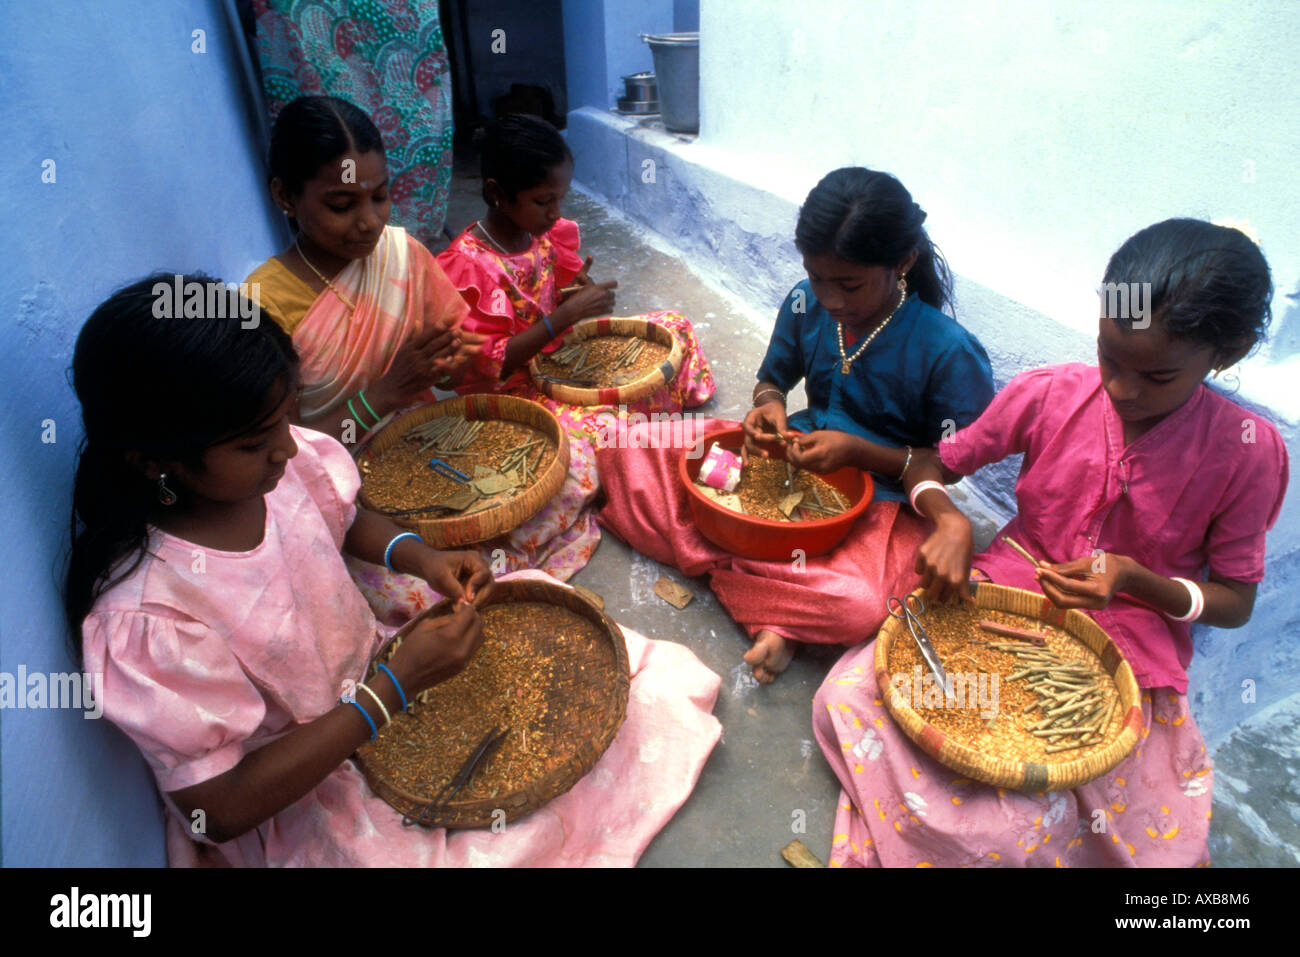 Child labor, Kerala, India, Asia Stock Photo